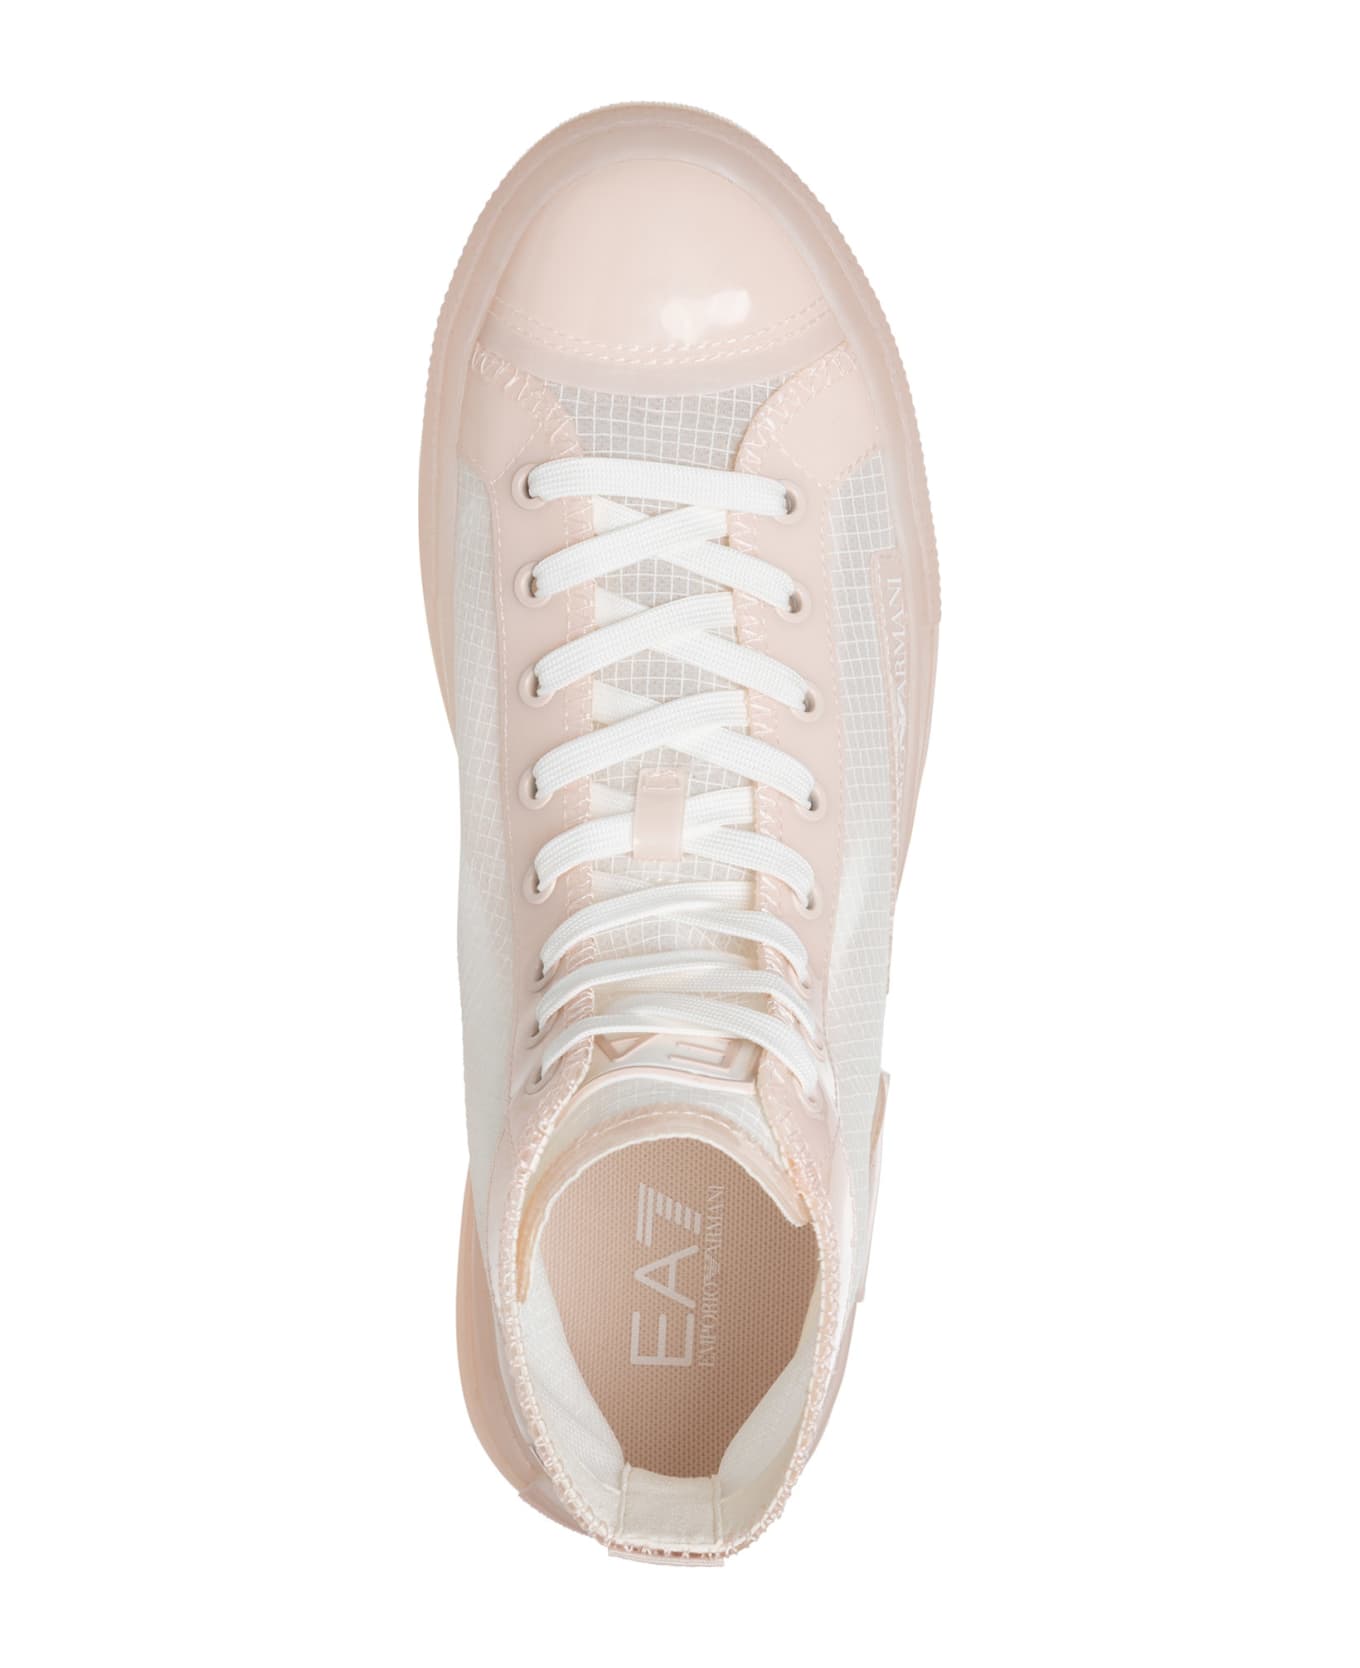 EA7 High-top Sneakers - Whisper Pink - White